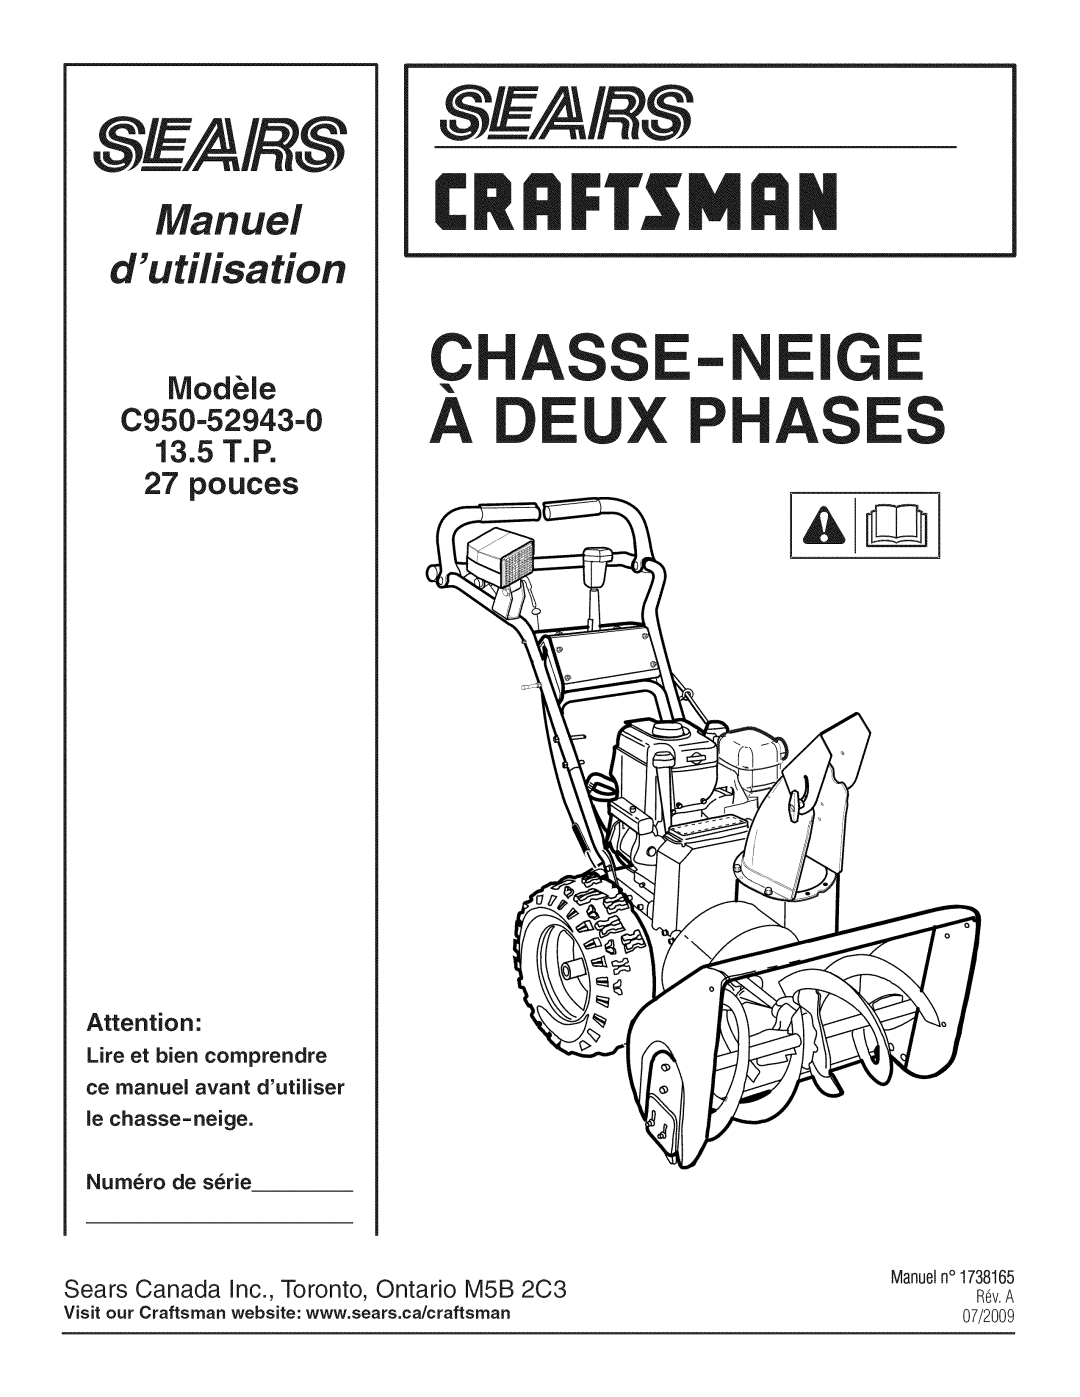 Craftsman owner manual A X Phas S, IVlod_le C950-52943-0 13.5T.P 27 pouces, Chass - Ige, Manuel duti;fisation 